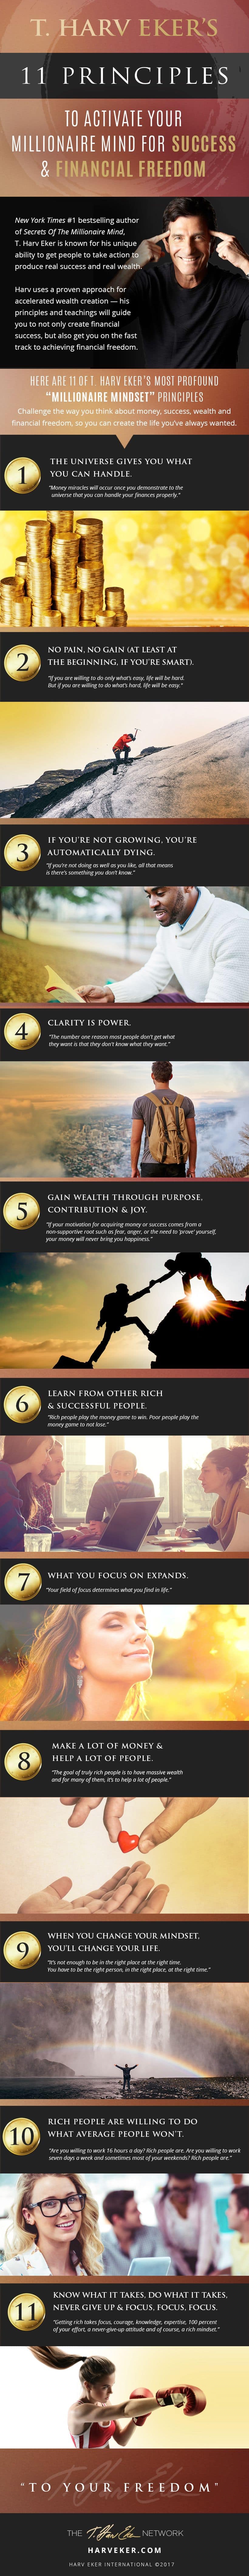 11-principles-infographic